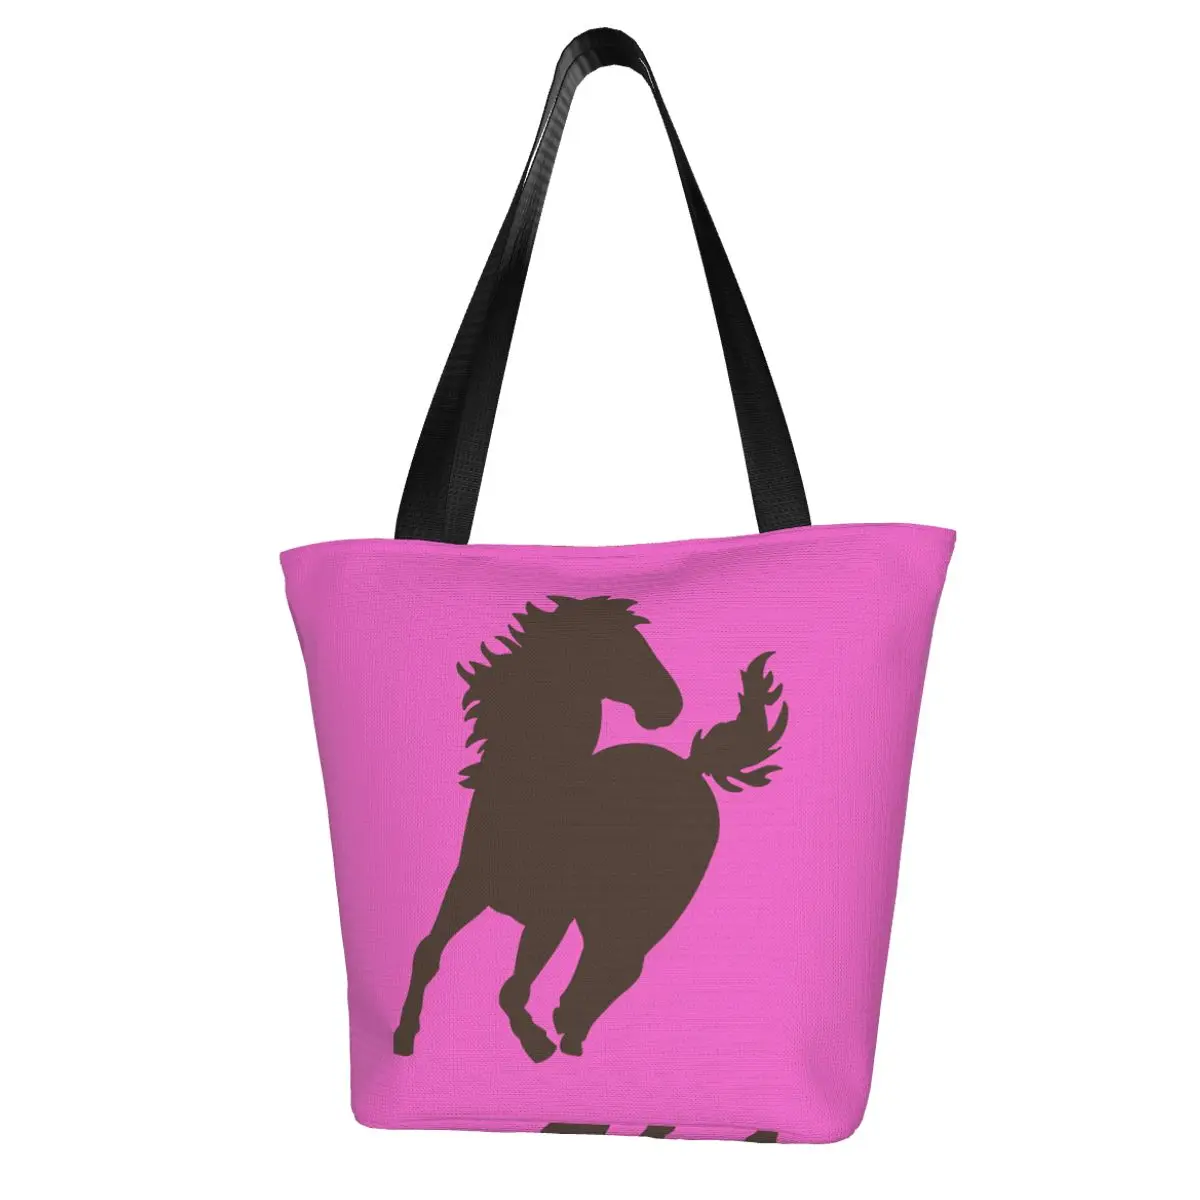 Horse Shopping Bag Aesthetic Cloth Outdoor Handbag Female Fashion Bags